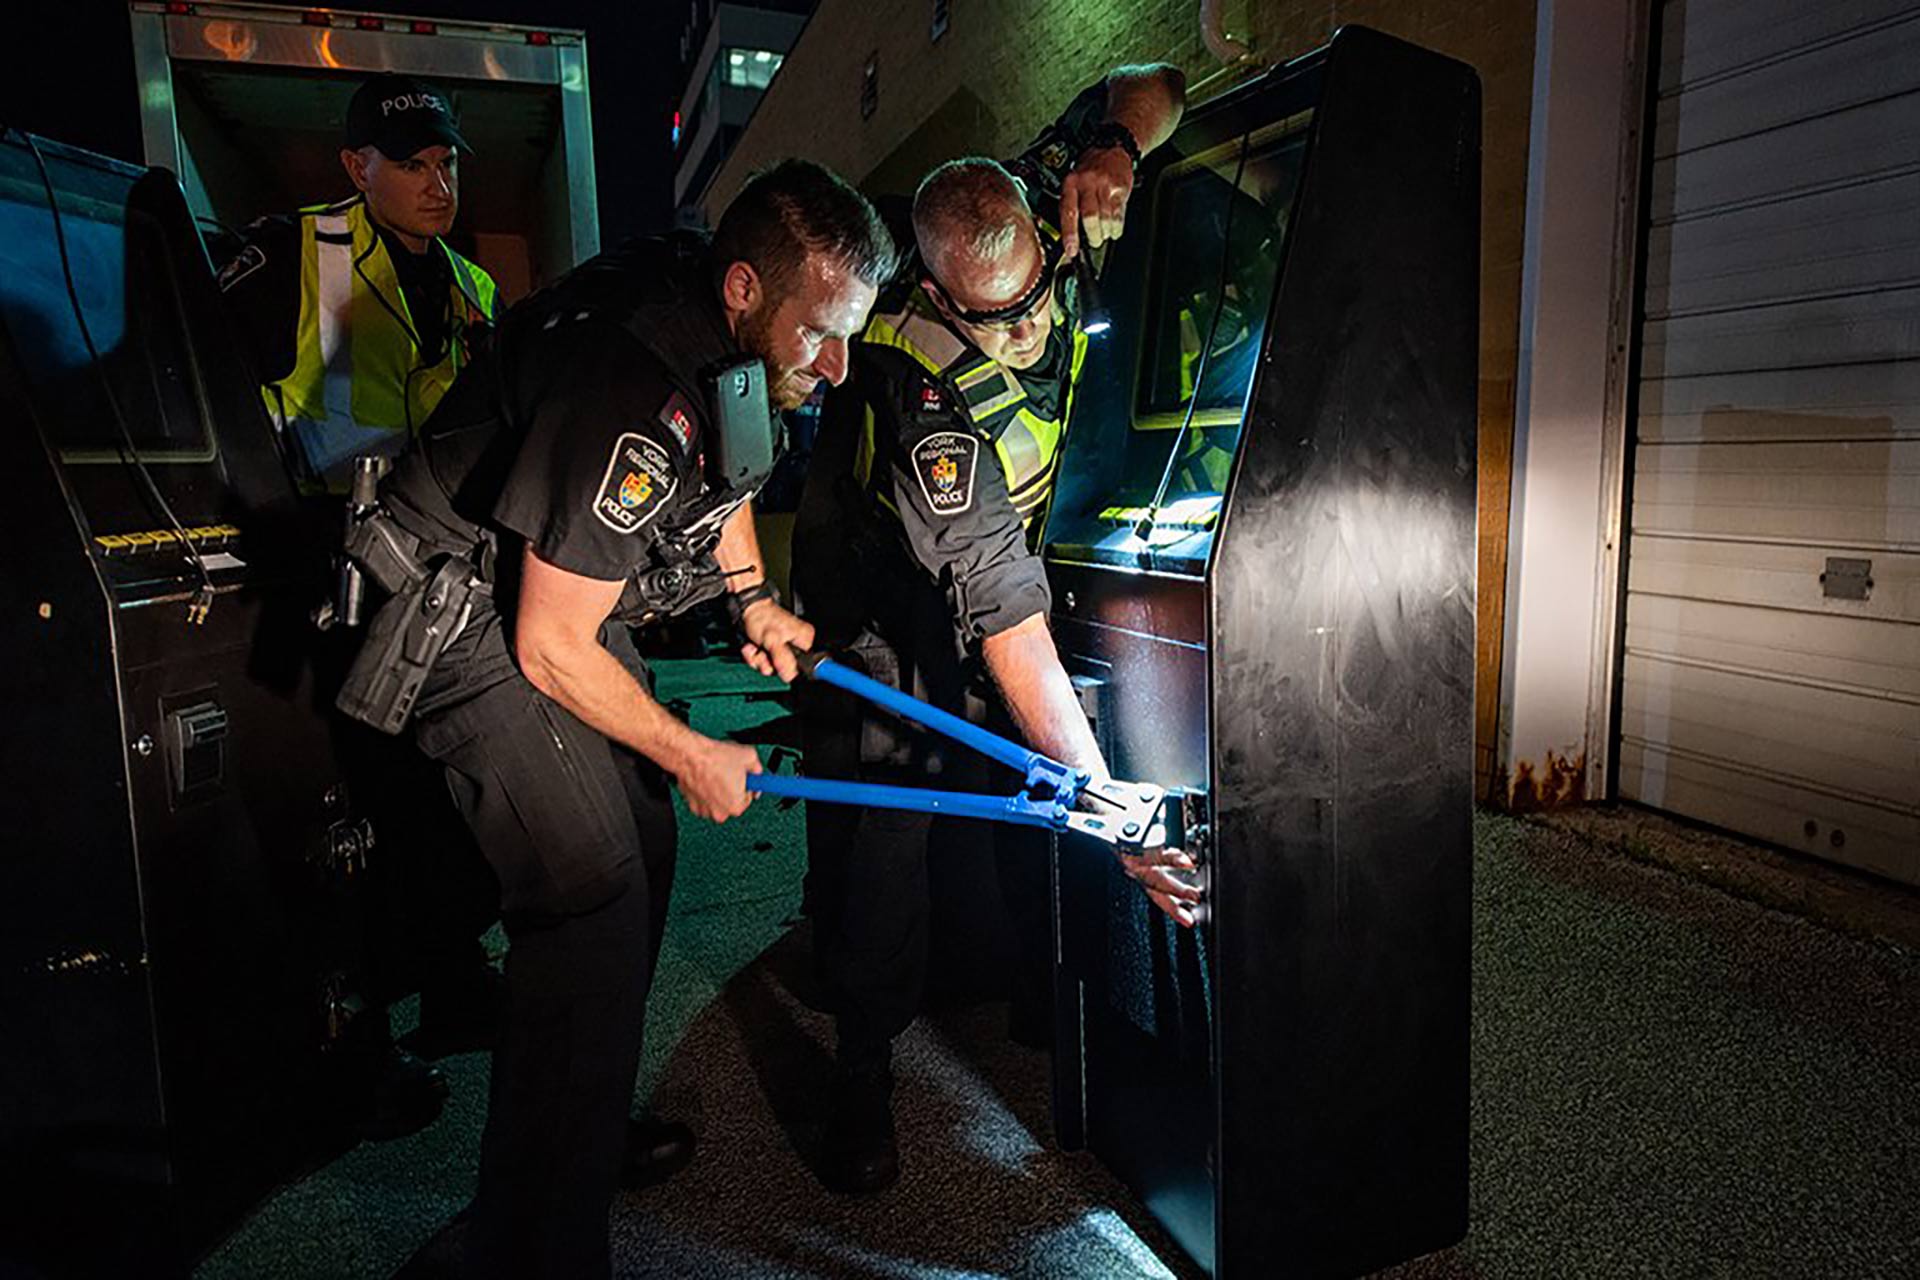 Police open a gaming machine qhidddiqdqiqruinv